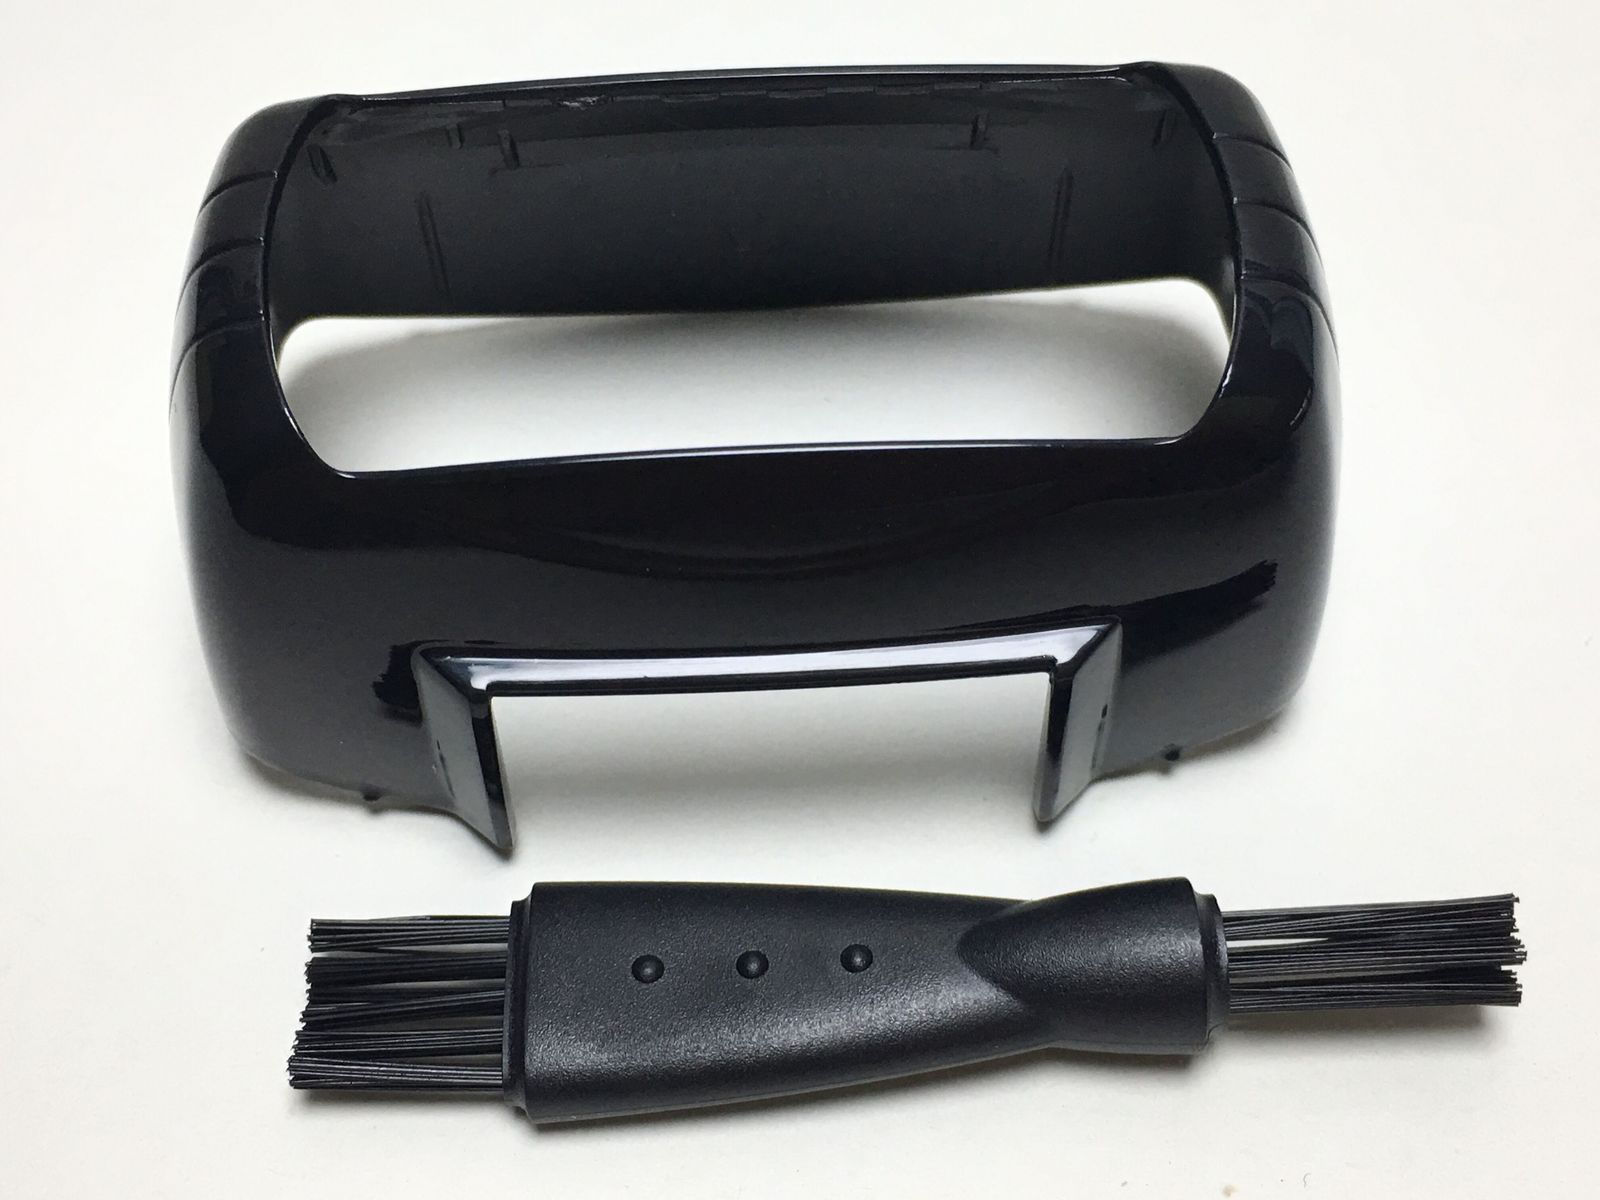 Primary image for Shaver Razor Holder Cover For Panasonic Arc4 ES-LA93-K Accessories Parts